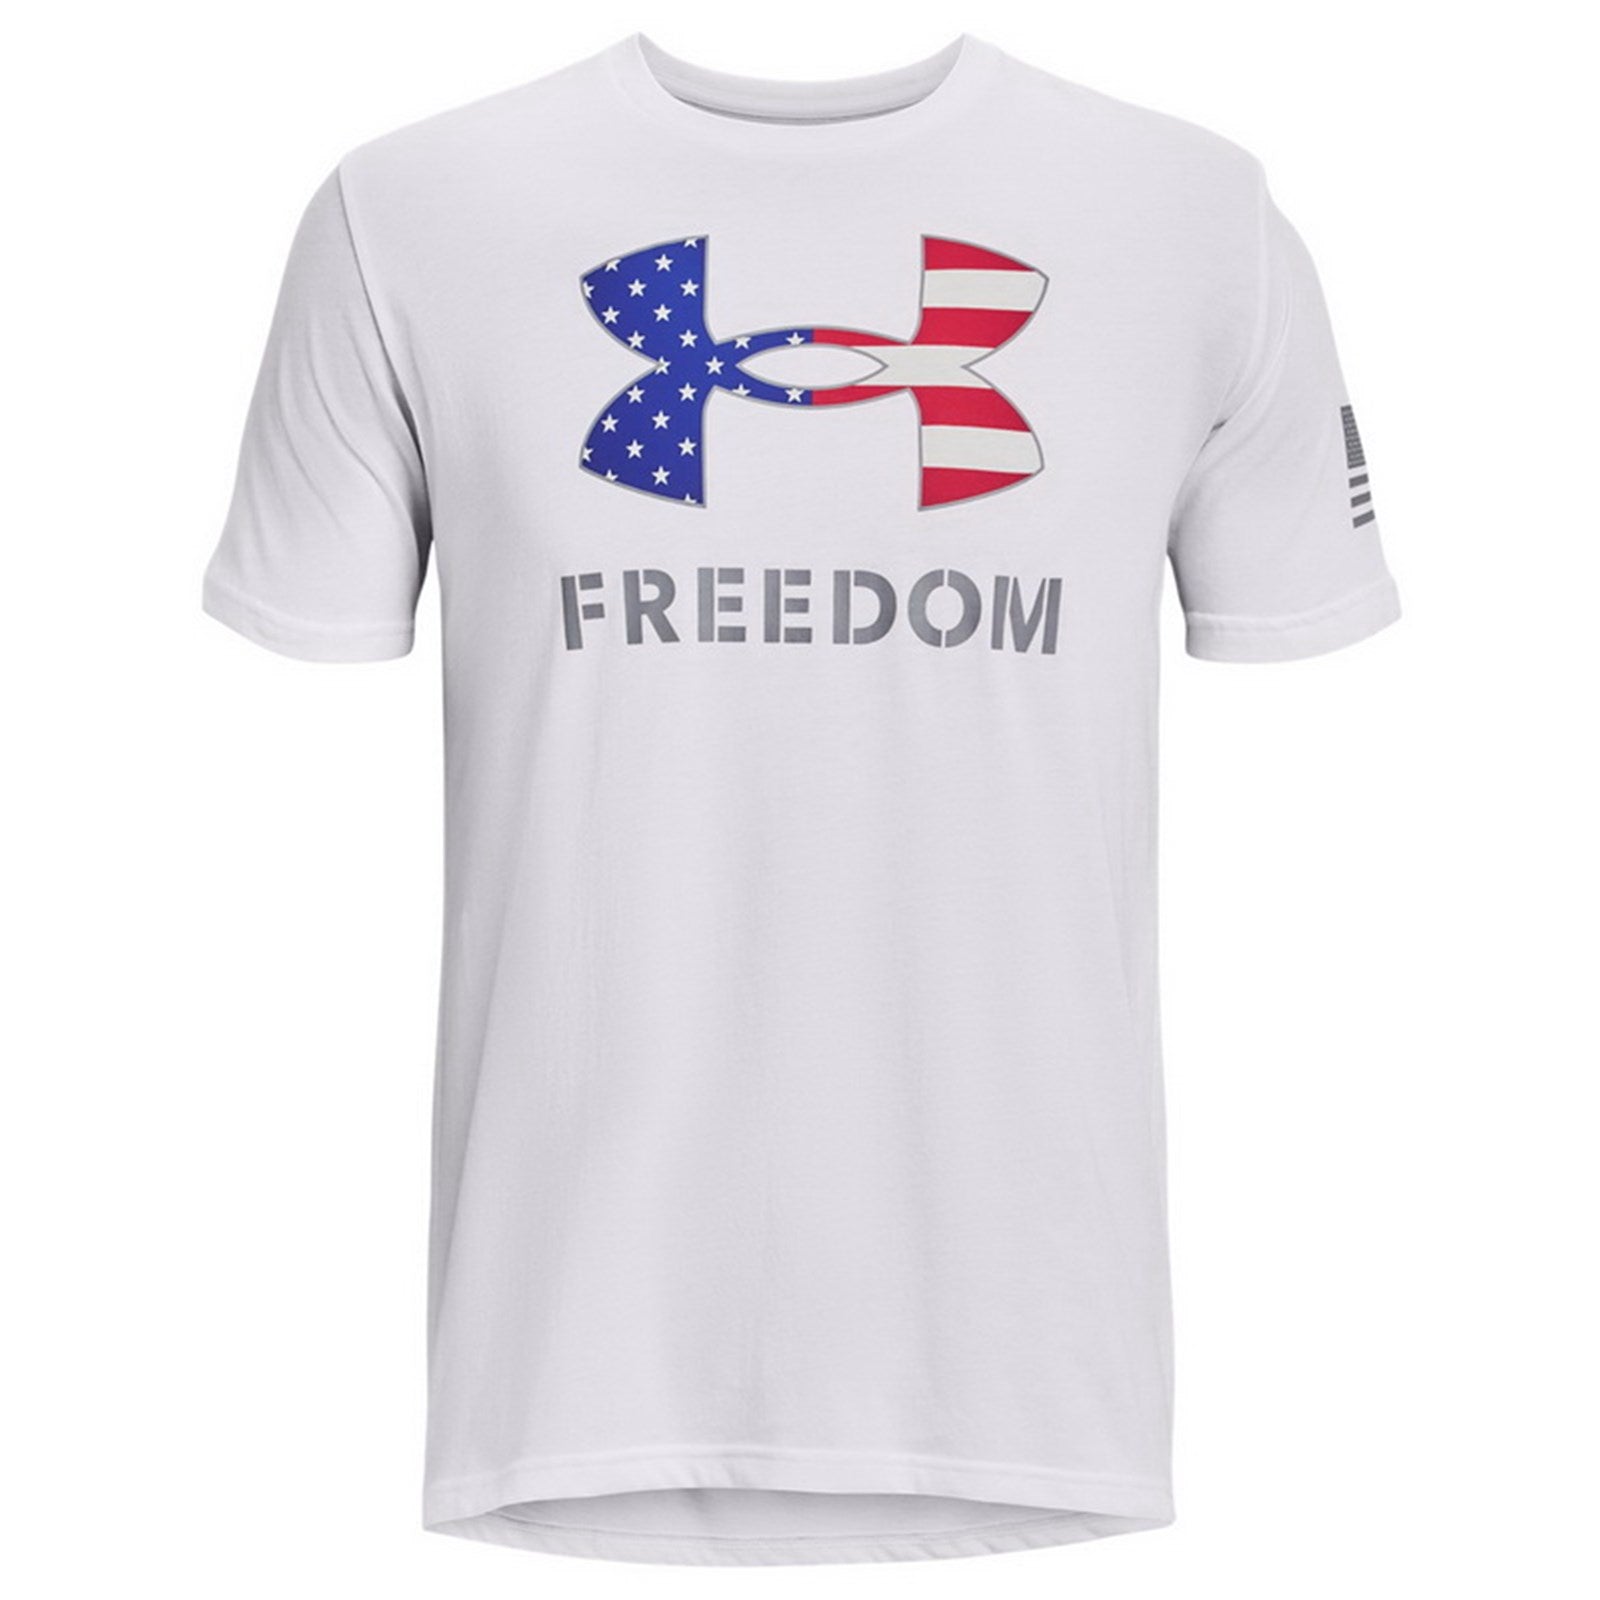 Under Armour Men New Freedom Banner Tshirt